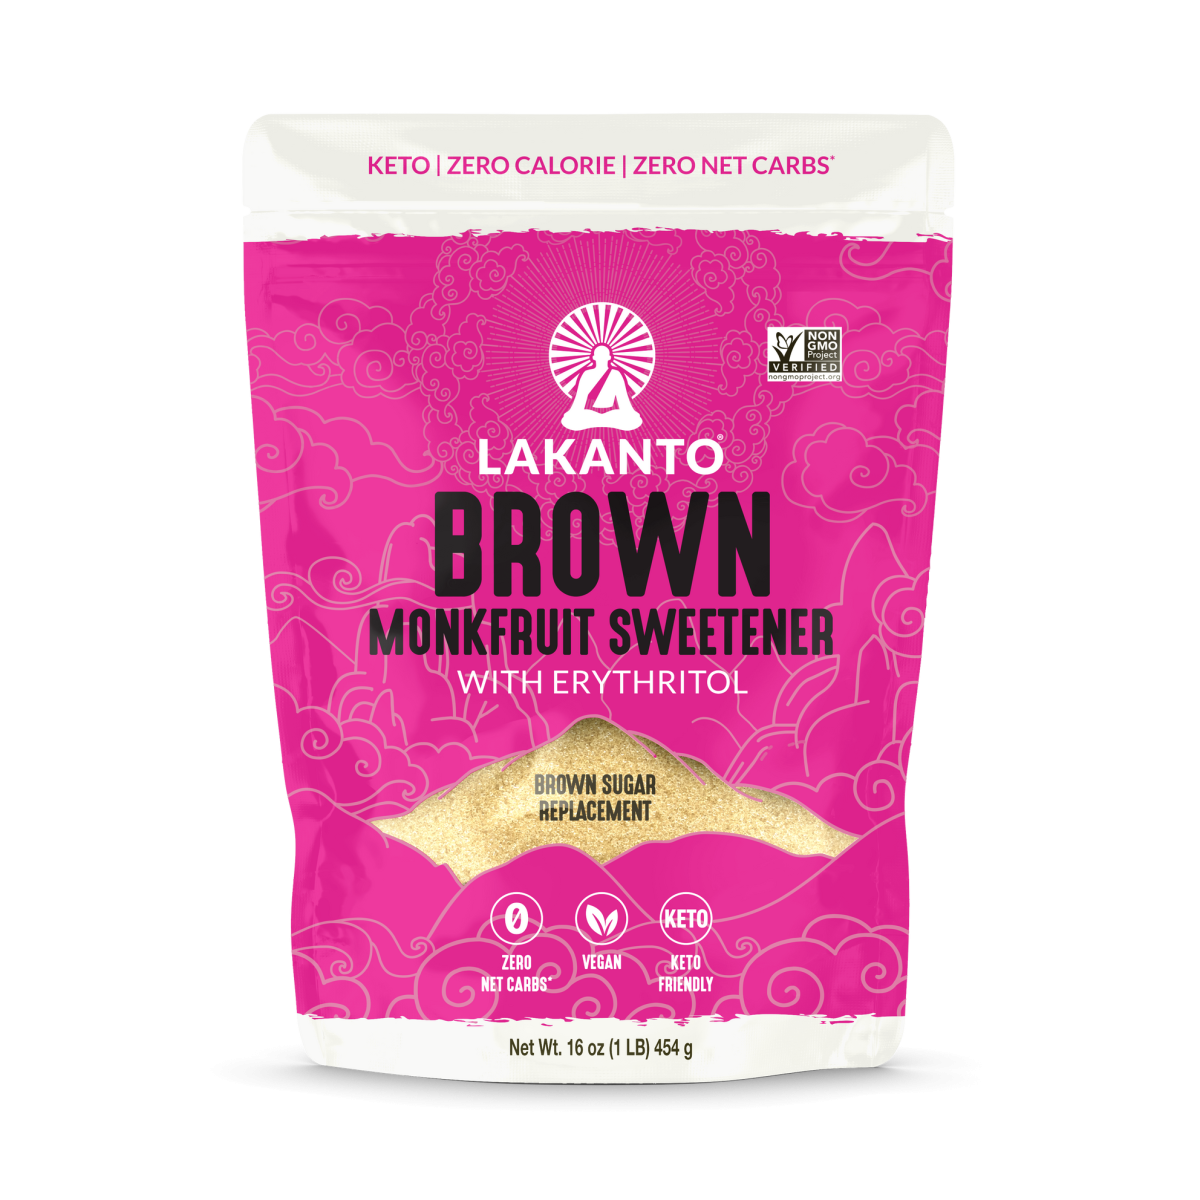 Lakanto Monkfruit Sweetener: Save 15% with promo code: pound15